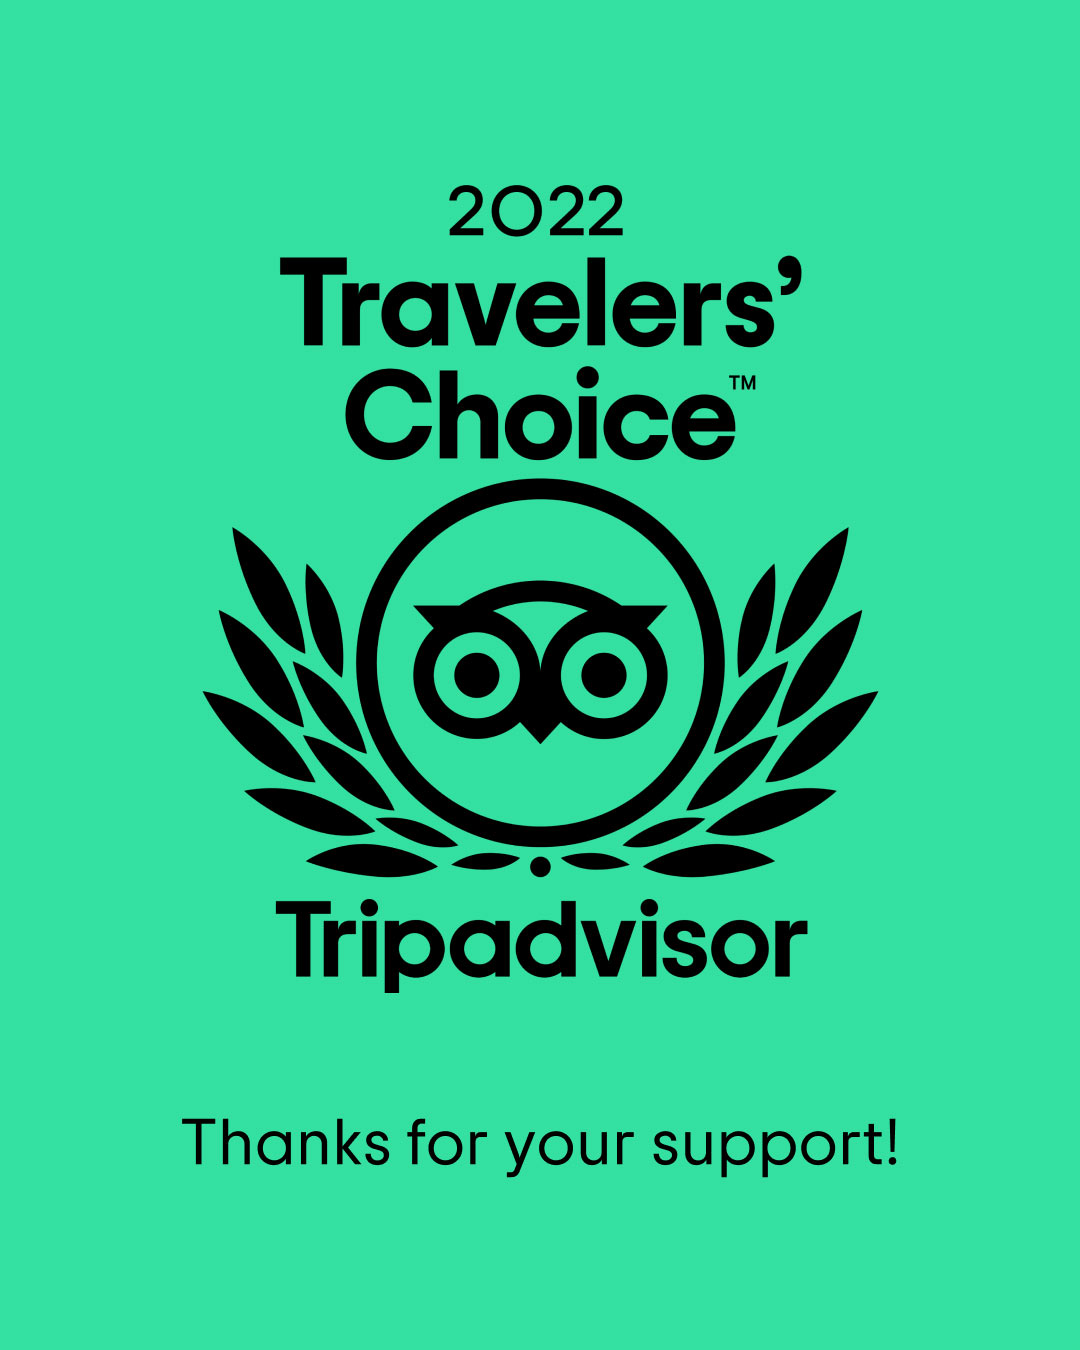 tripadvisor-travellers-choice-winner-2022